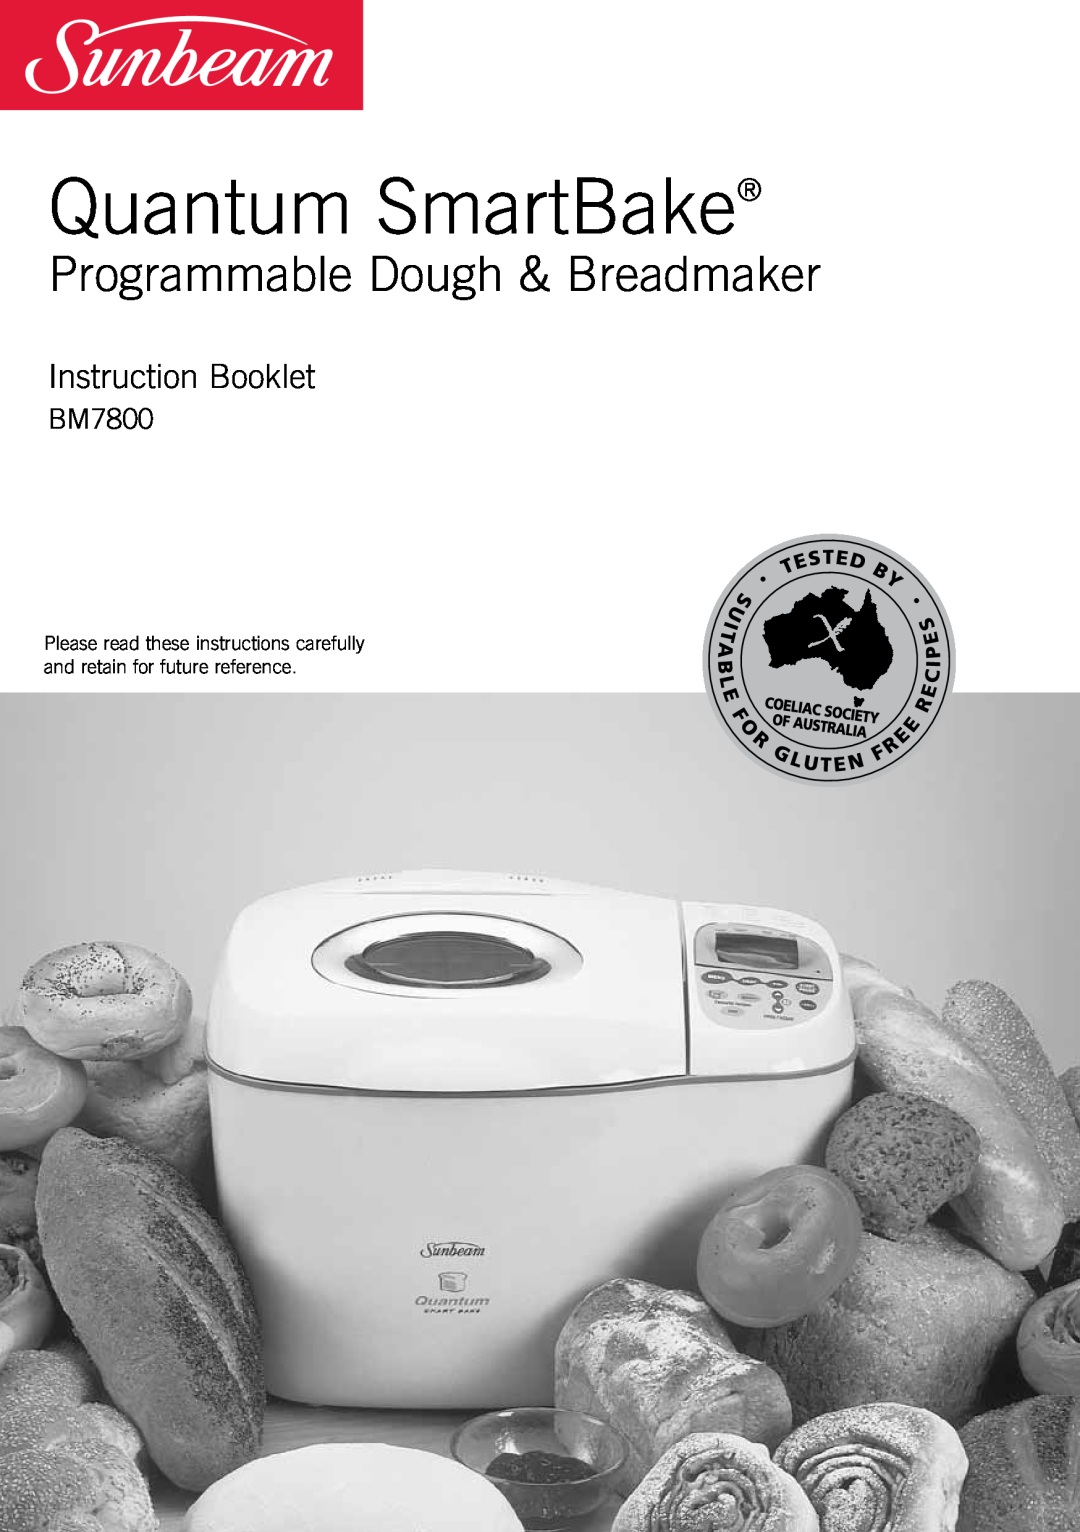 Sunbeam manual Quantum SmartBake, Programmable Dough & Breadmaker, INSTRUCTION/RECIPE BOOKLET BM7800 